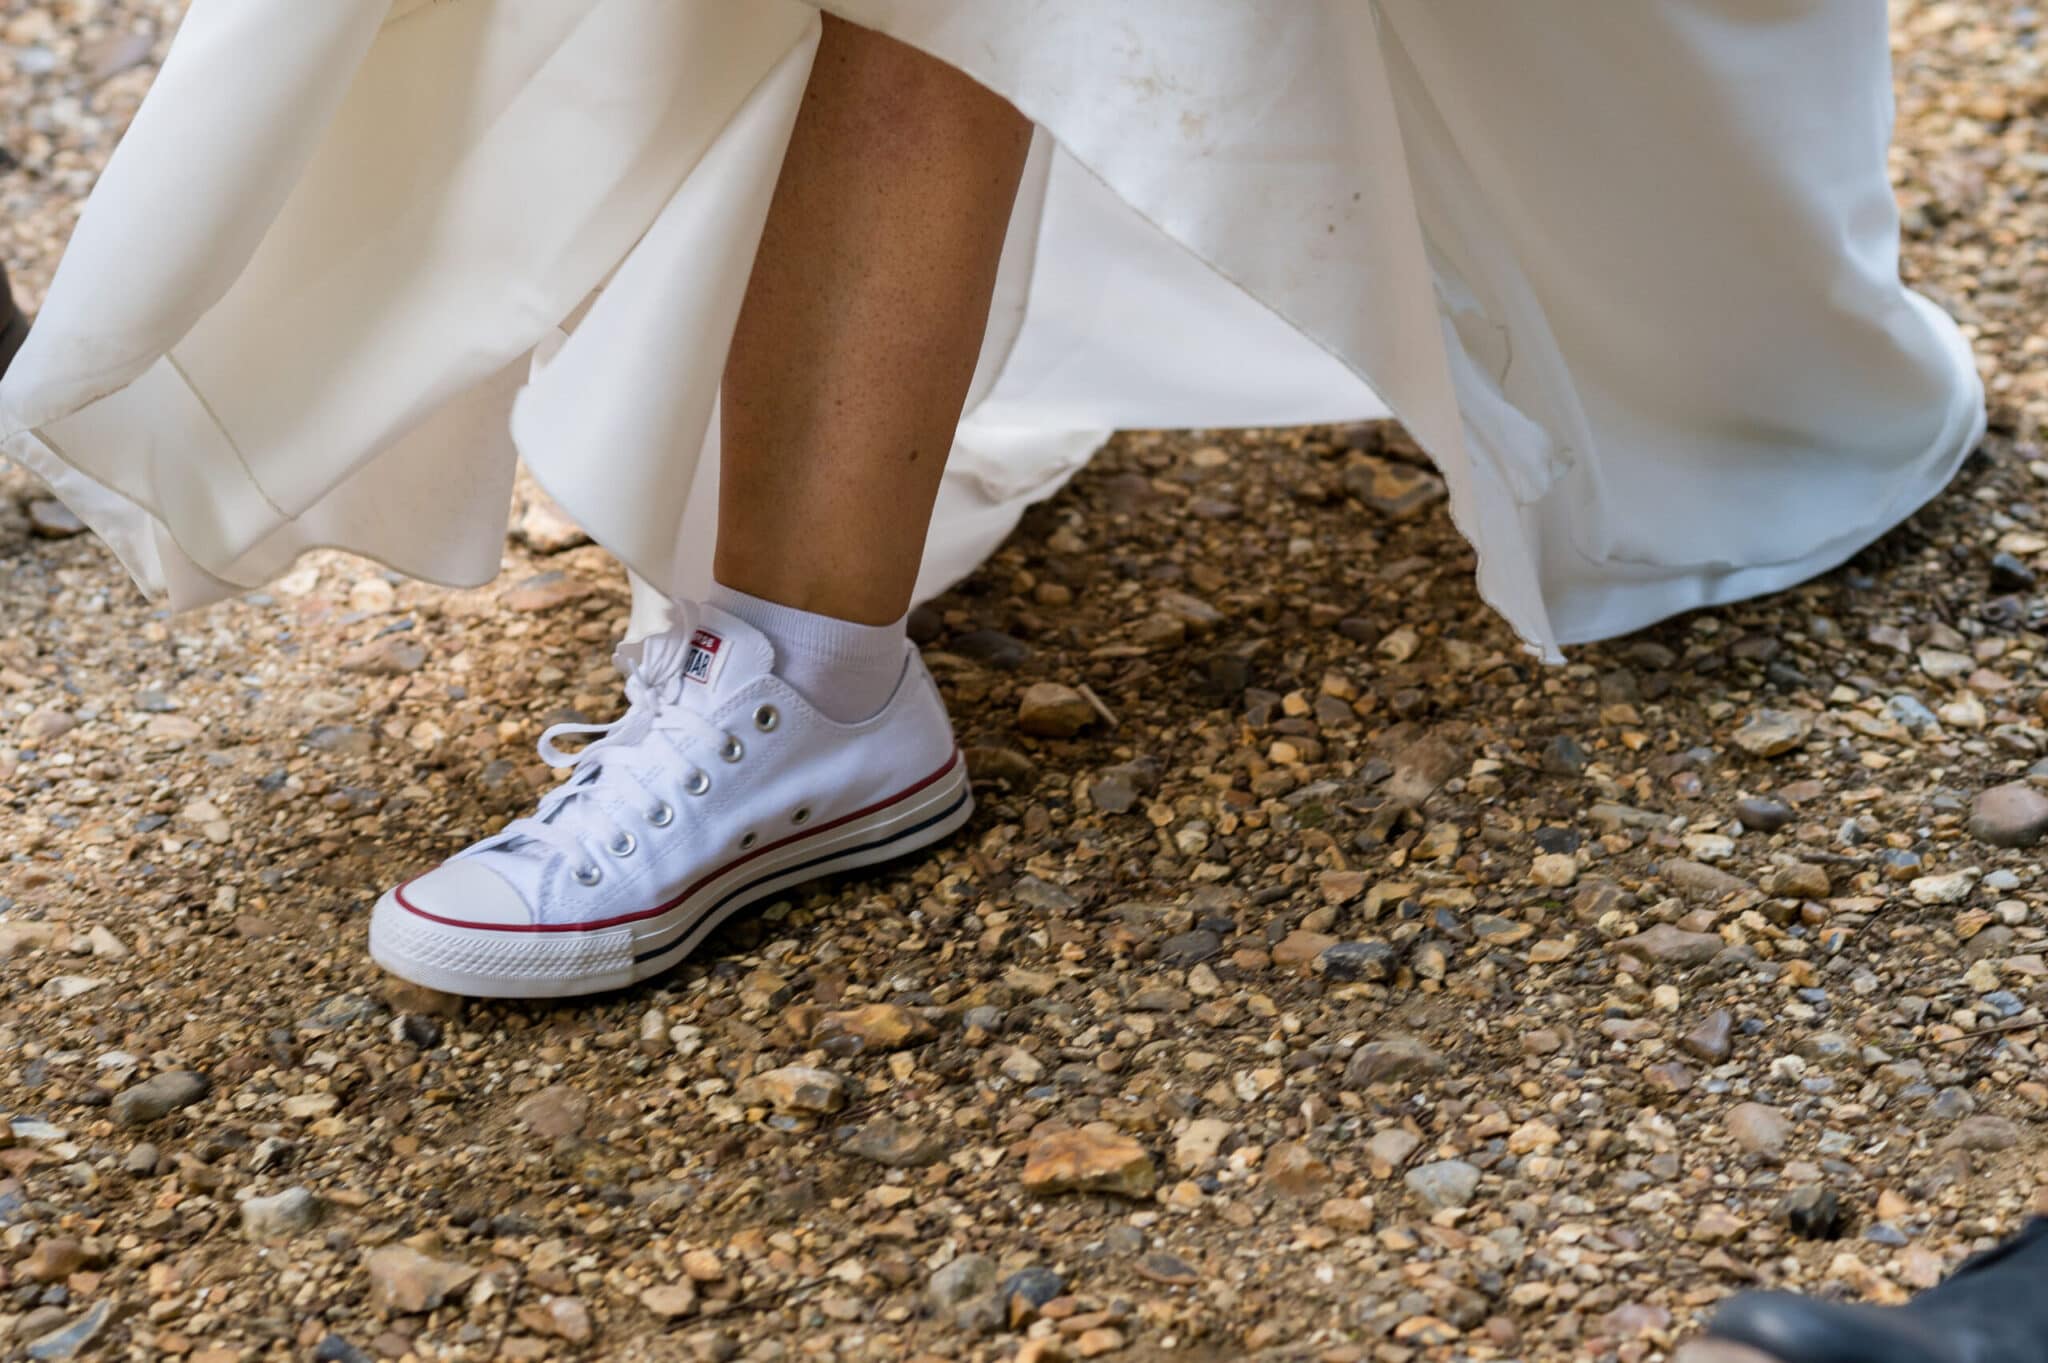 Wedding Converse shoes at woodland wedding